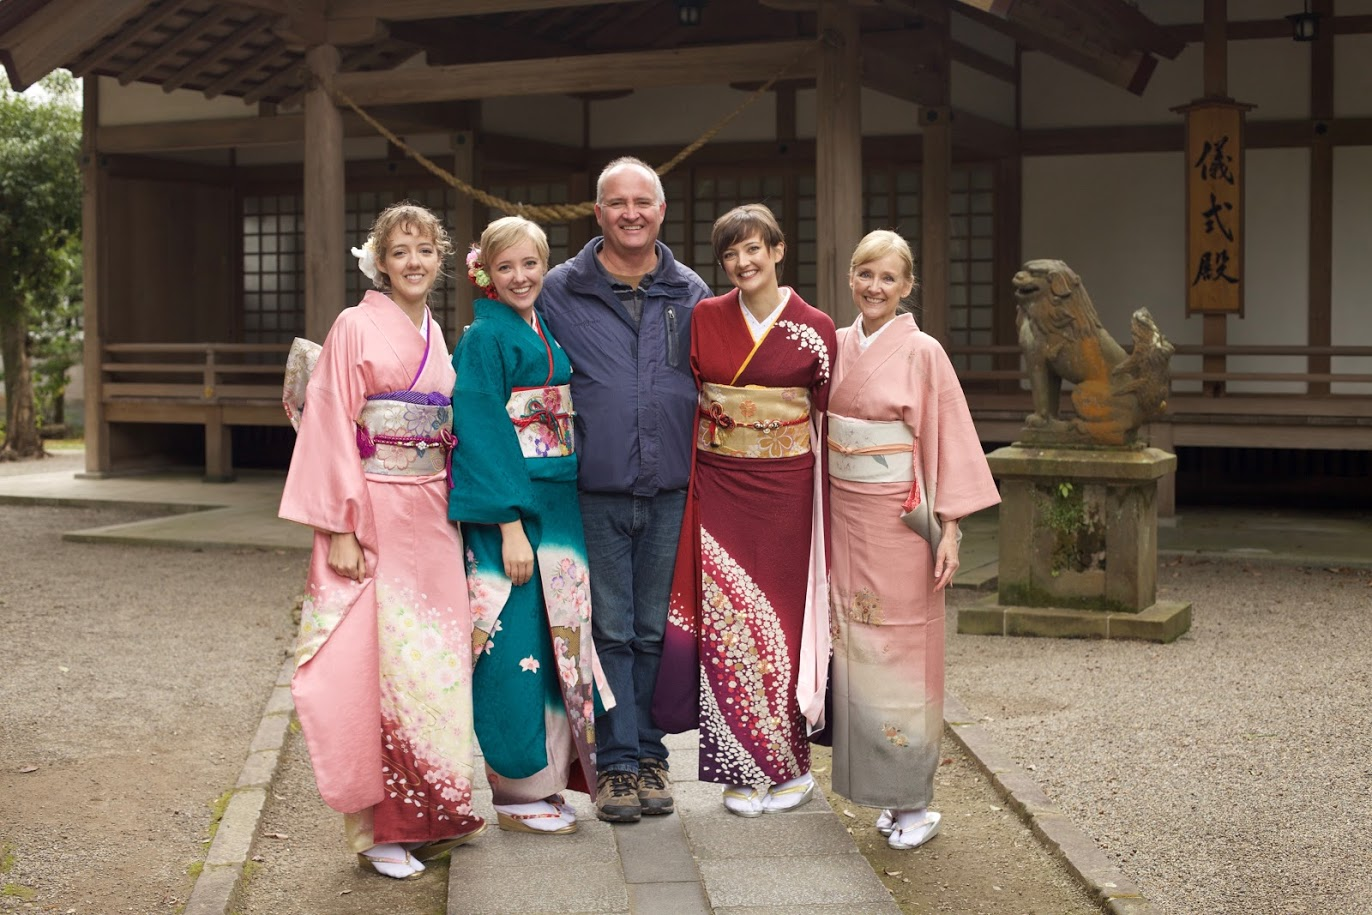 Everyone (except Dad) in kimonons